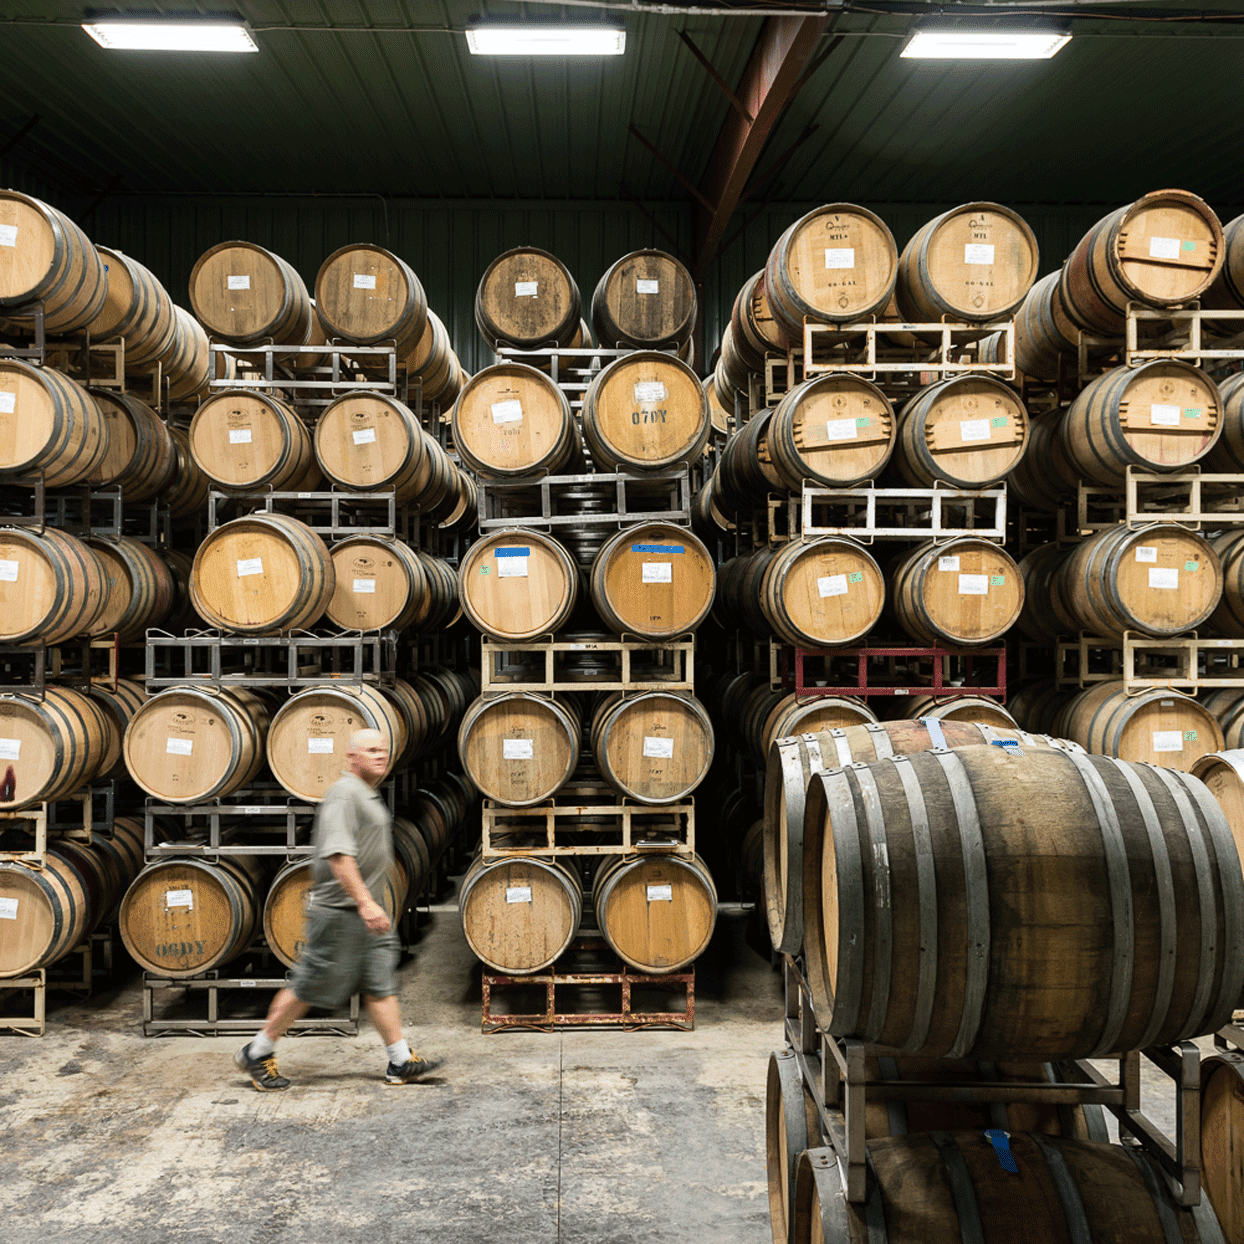 Wine barrels stacked on racks